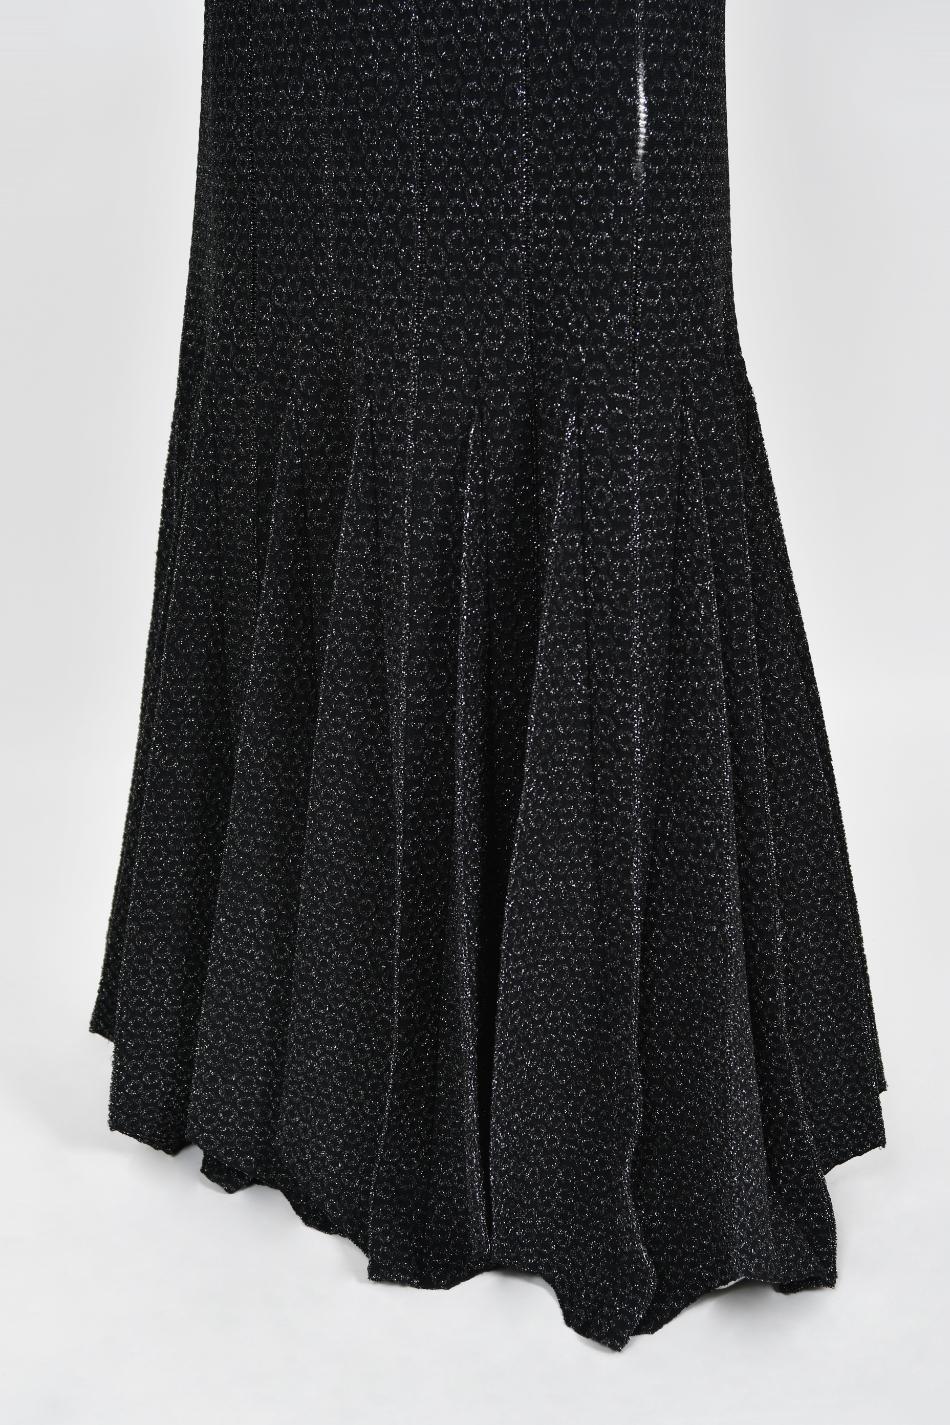 Vintage Azzedine Alaia Black Metallic Knit Bodycon Sheer Cutwork Fishtail Gown For Sale 3